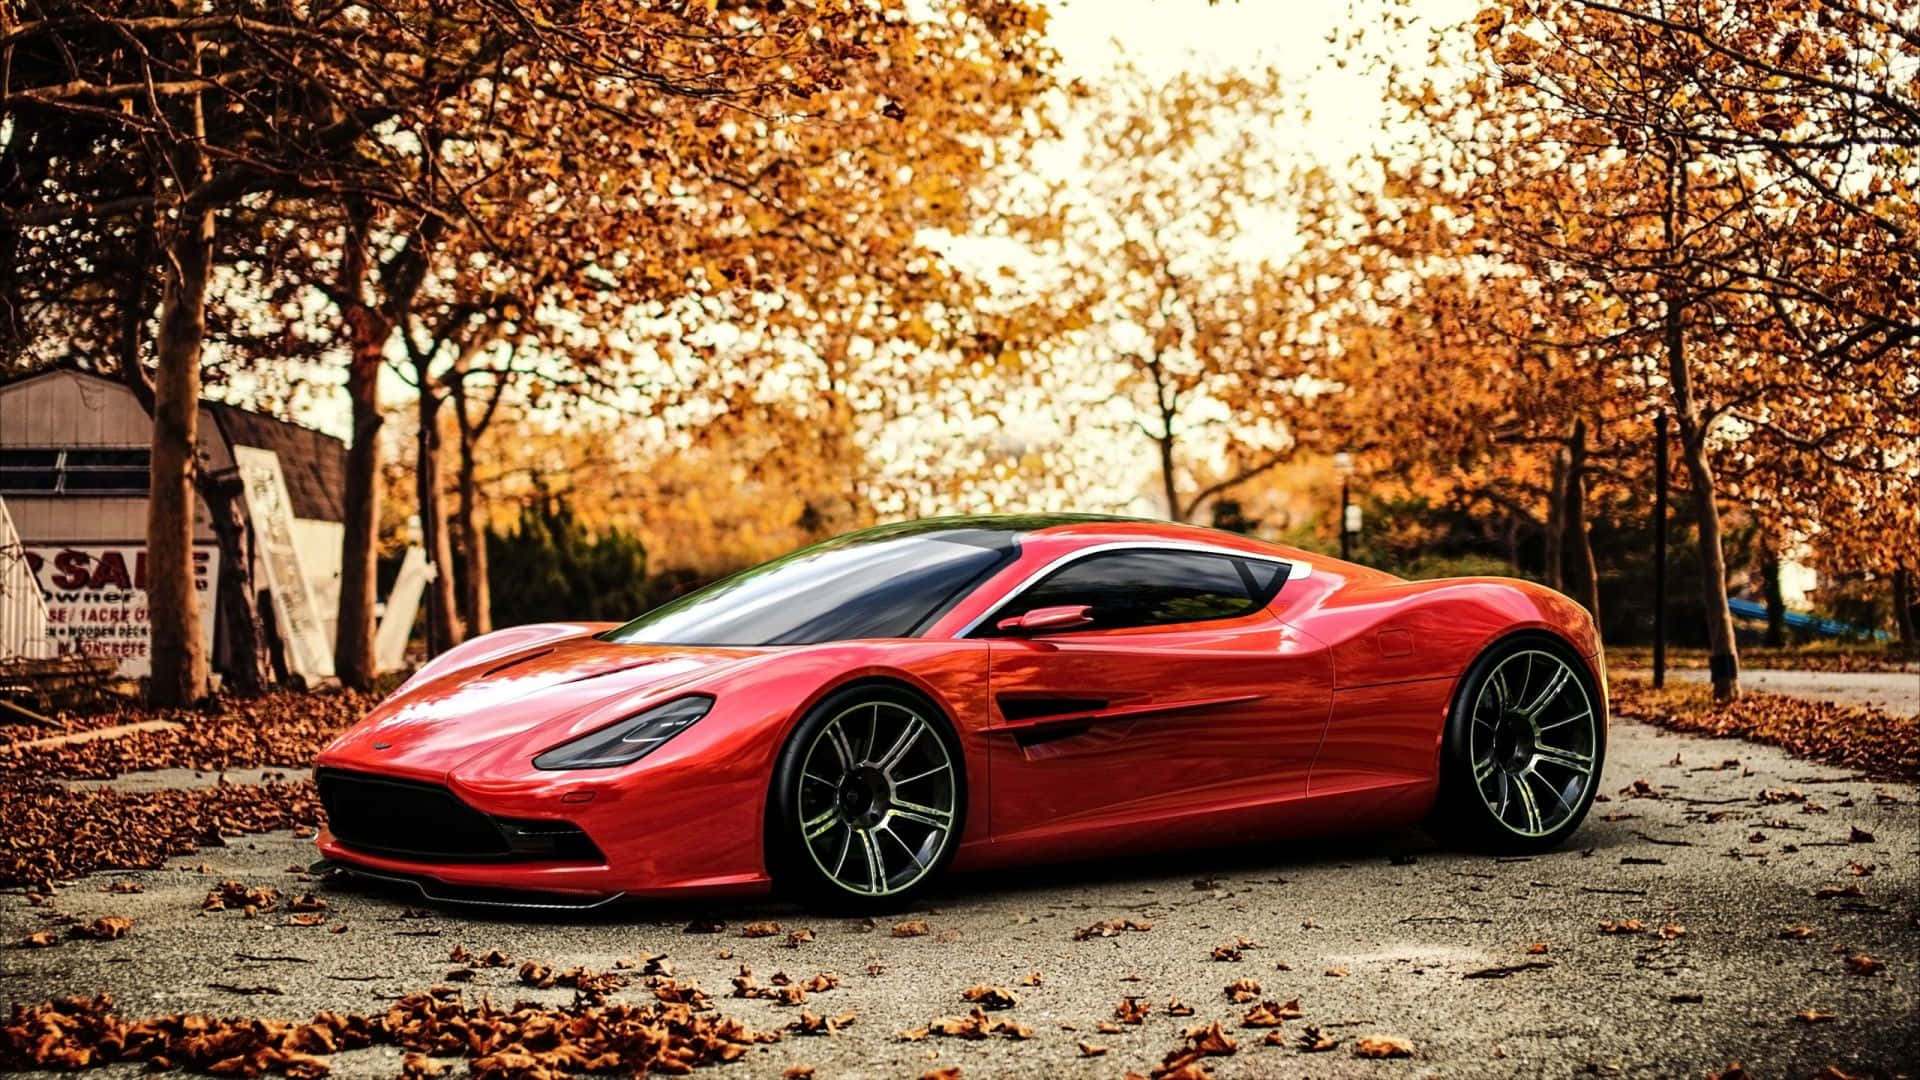 Top 10 Car Red Aston Martin DBS Fall Wallpaper